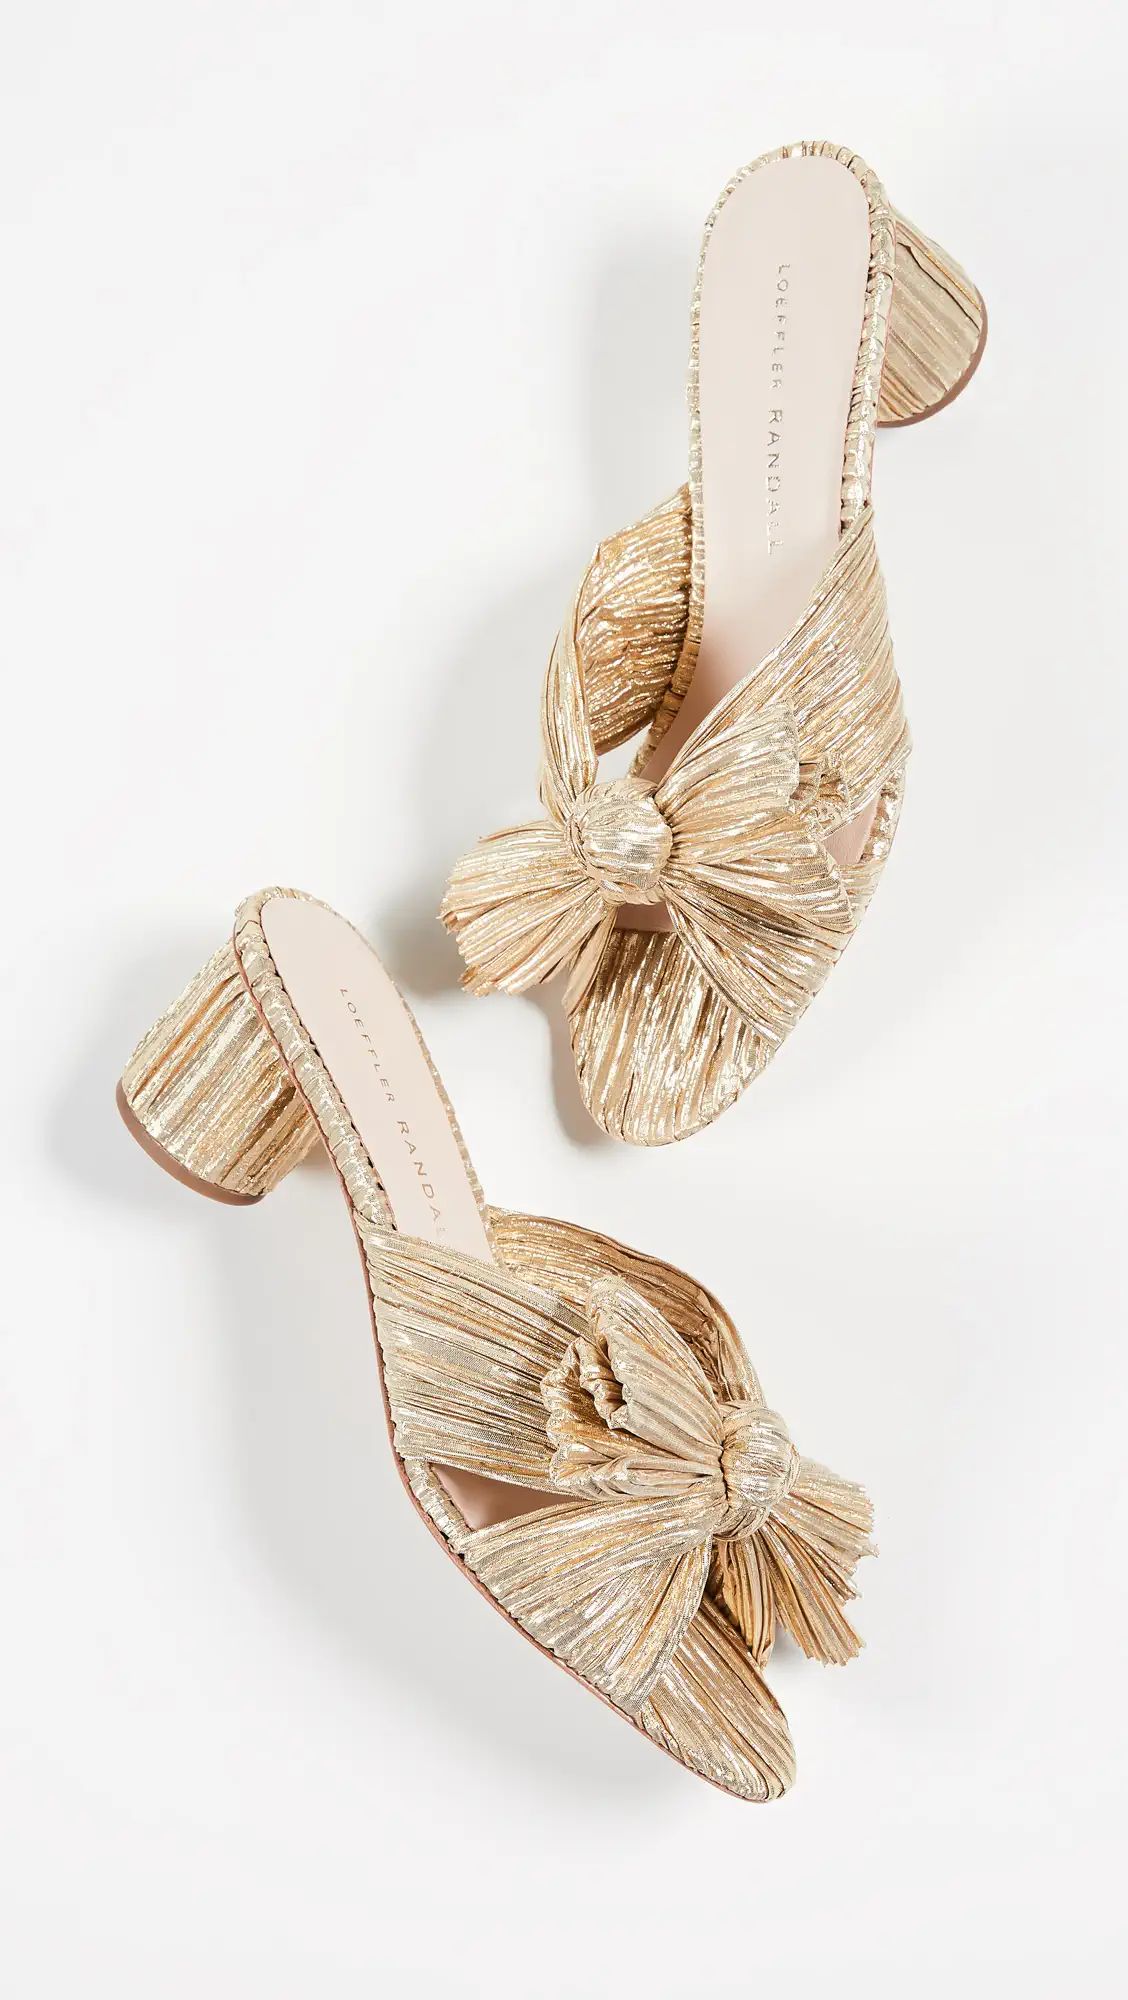 Loeffler Randall Emilia Pleated Bow Sandals | Shopbop | Shopbop